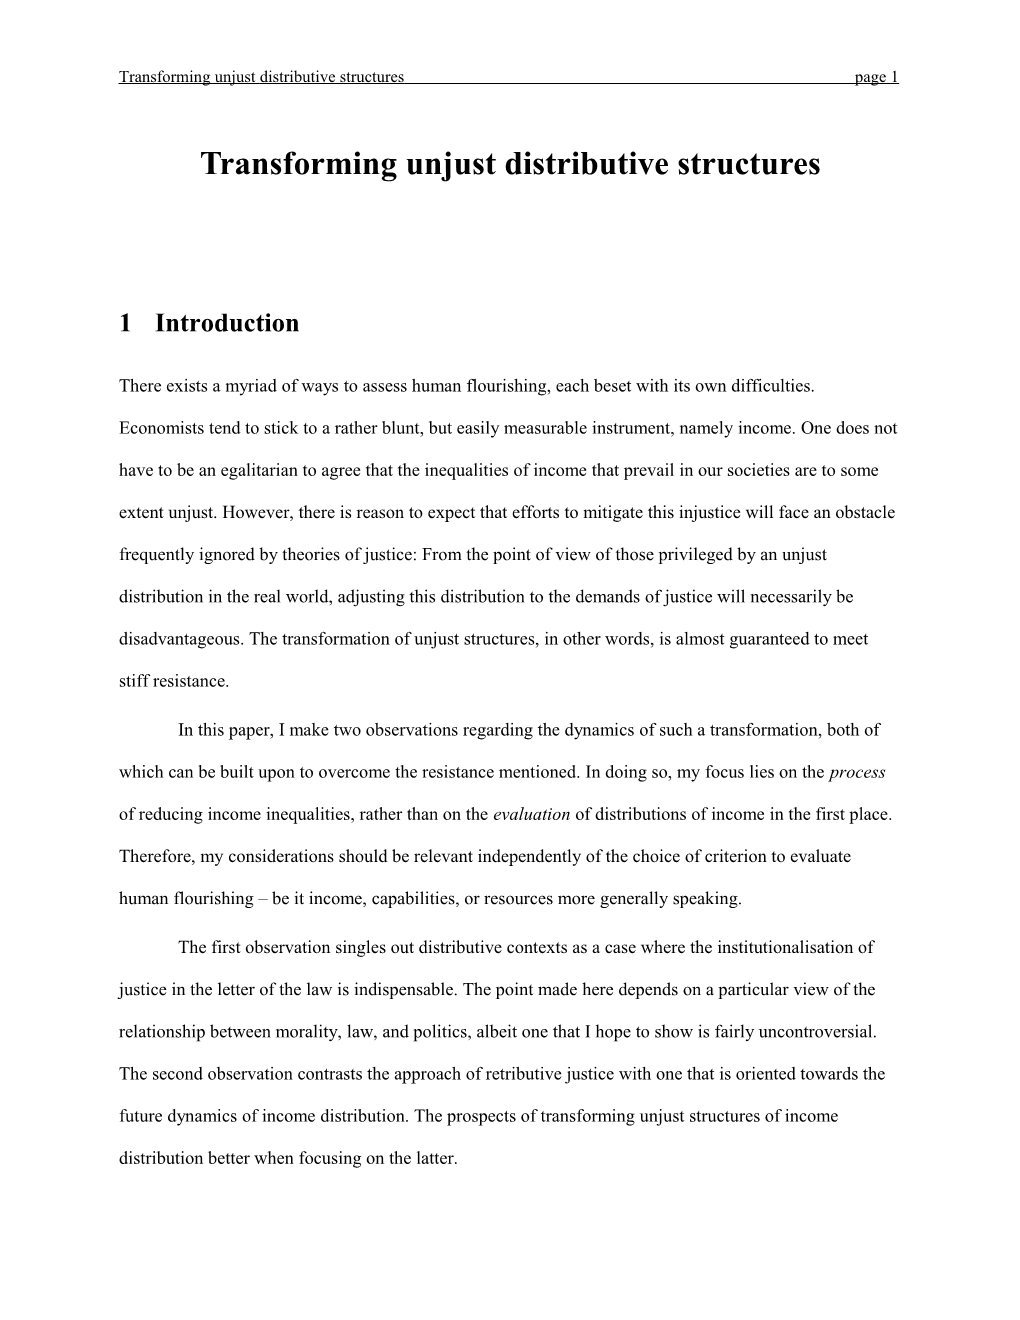 Transforming Unjust Distributive Structures